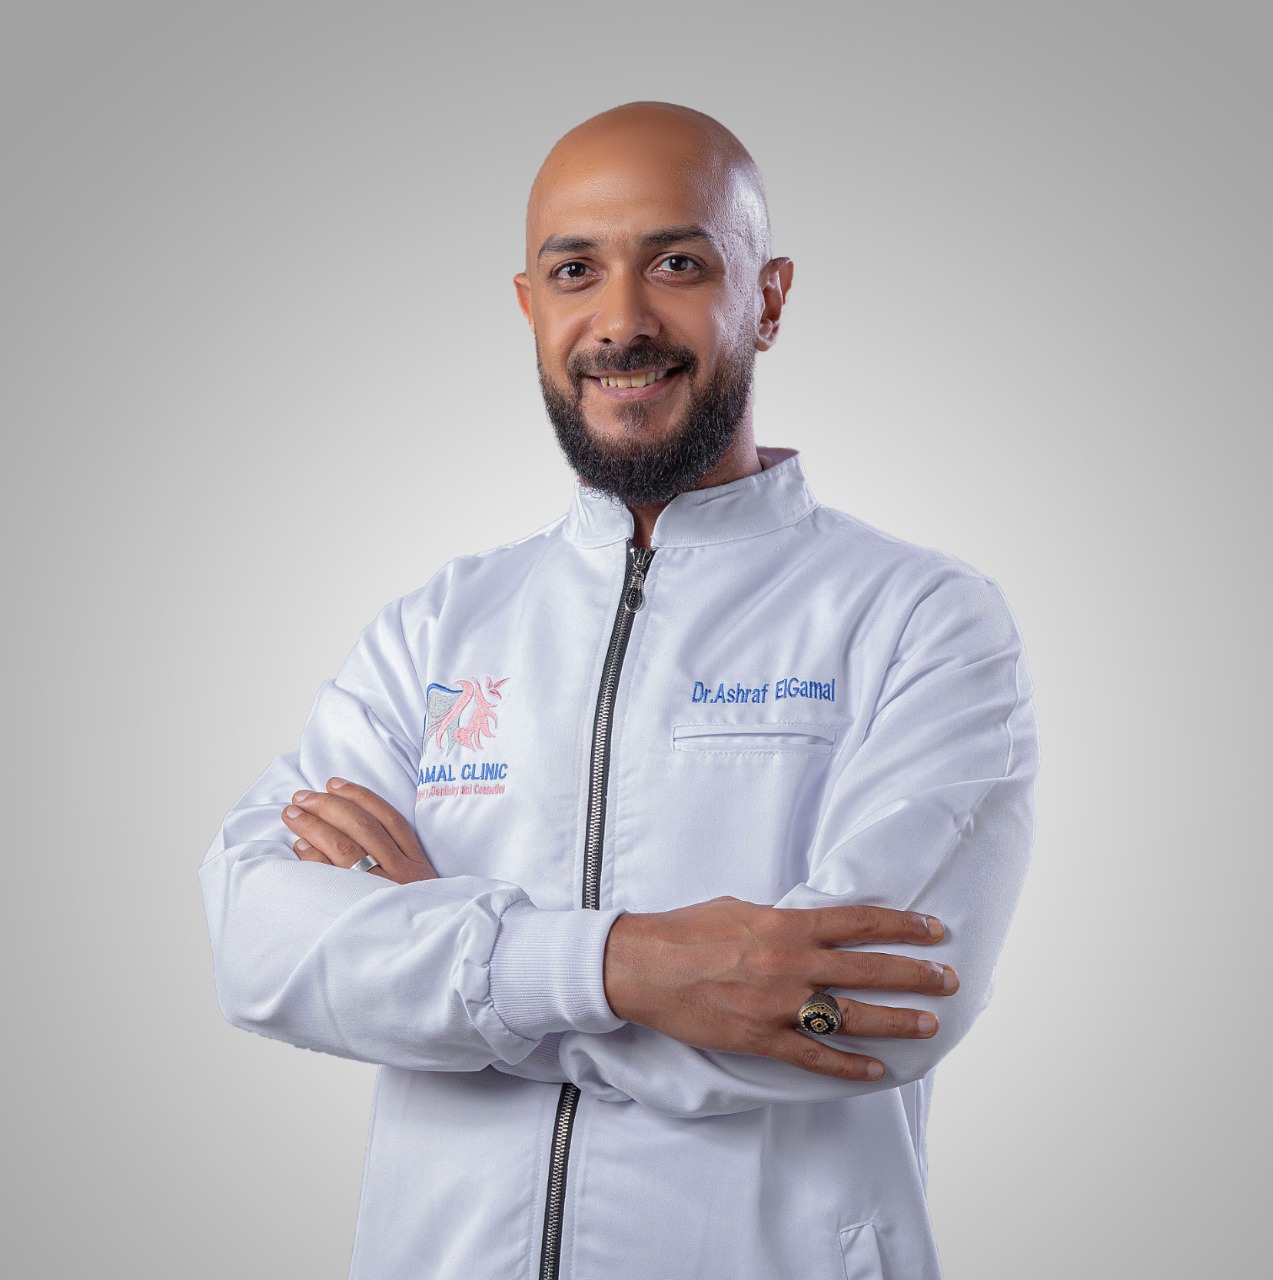 Dr. Ashraf Lofty ElGamal